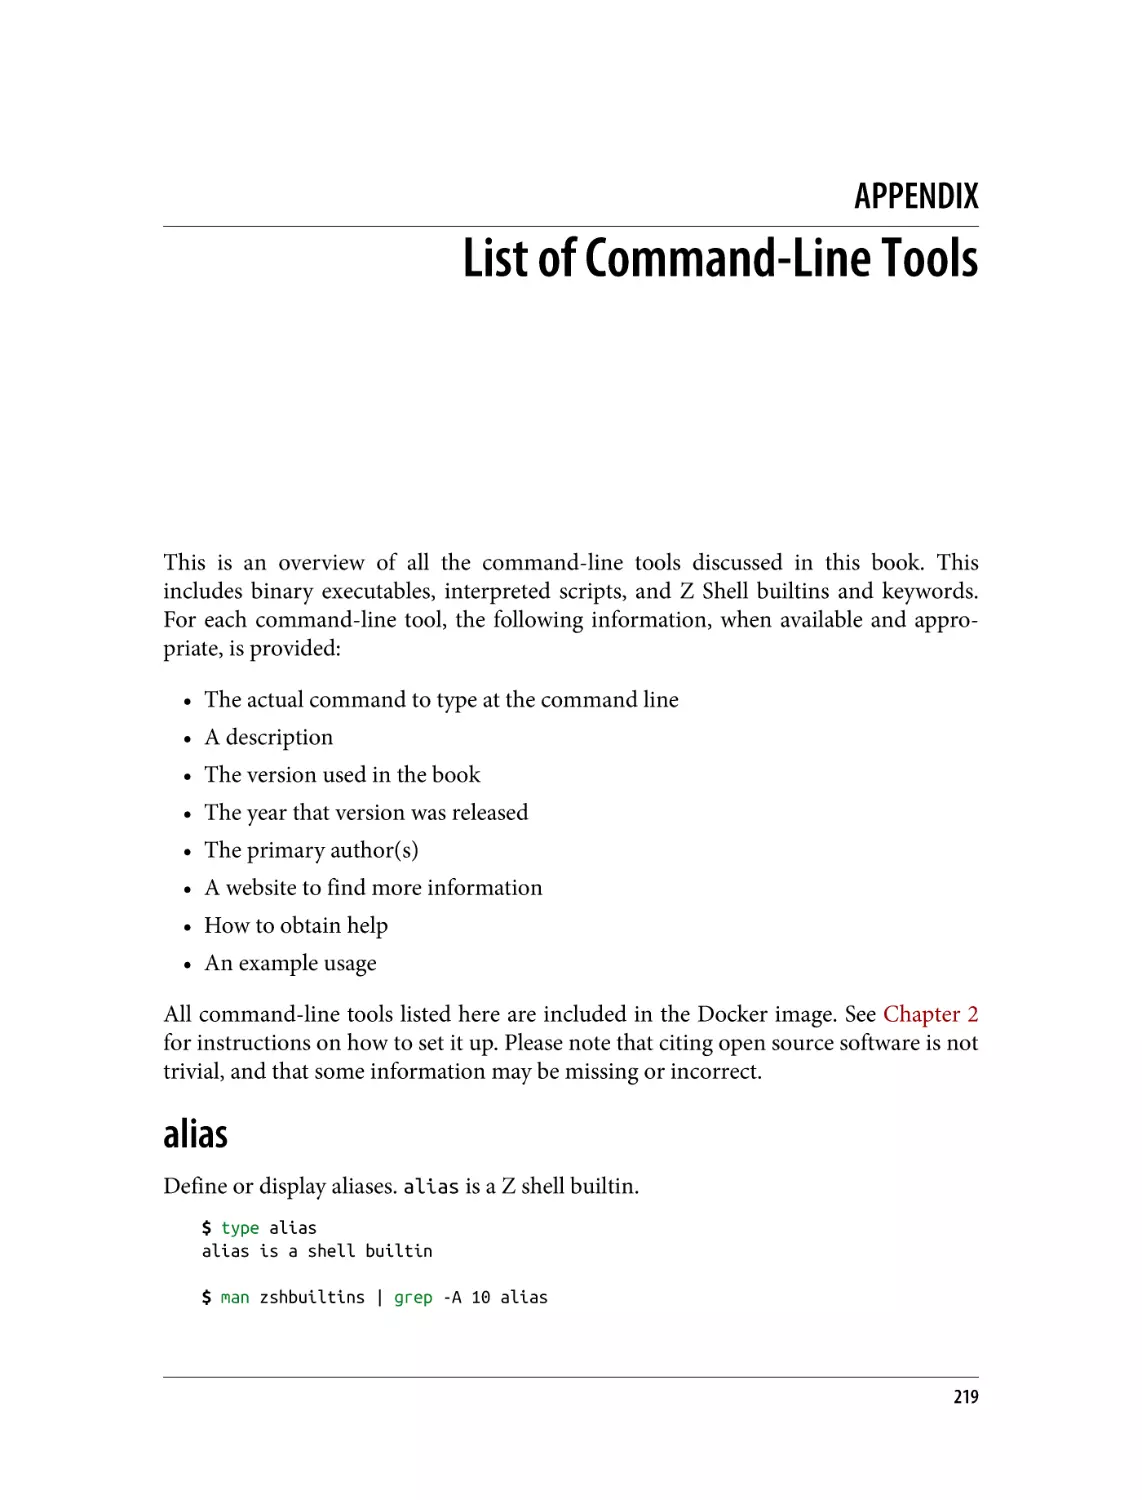 Appendix. List of Command-Line Tools
alias